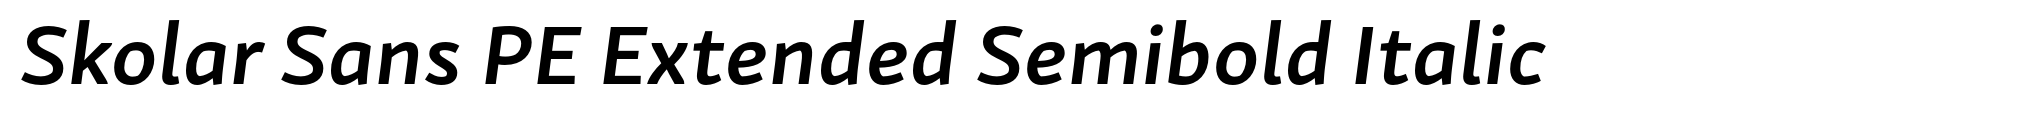 Skolar Sans PE Extended Semibold Italic image